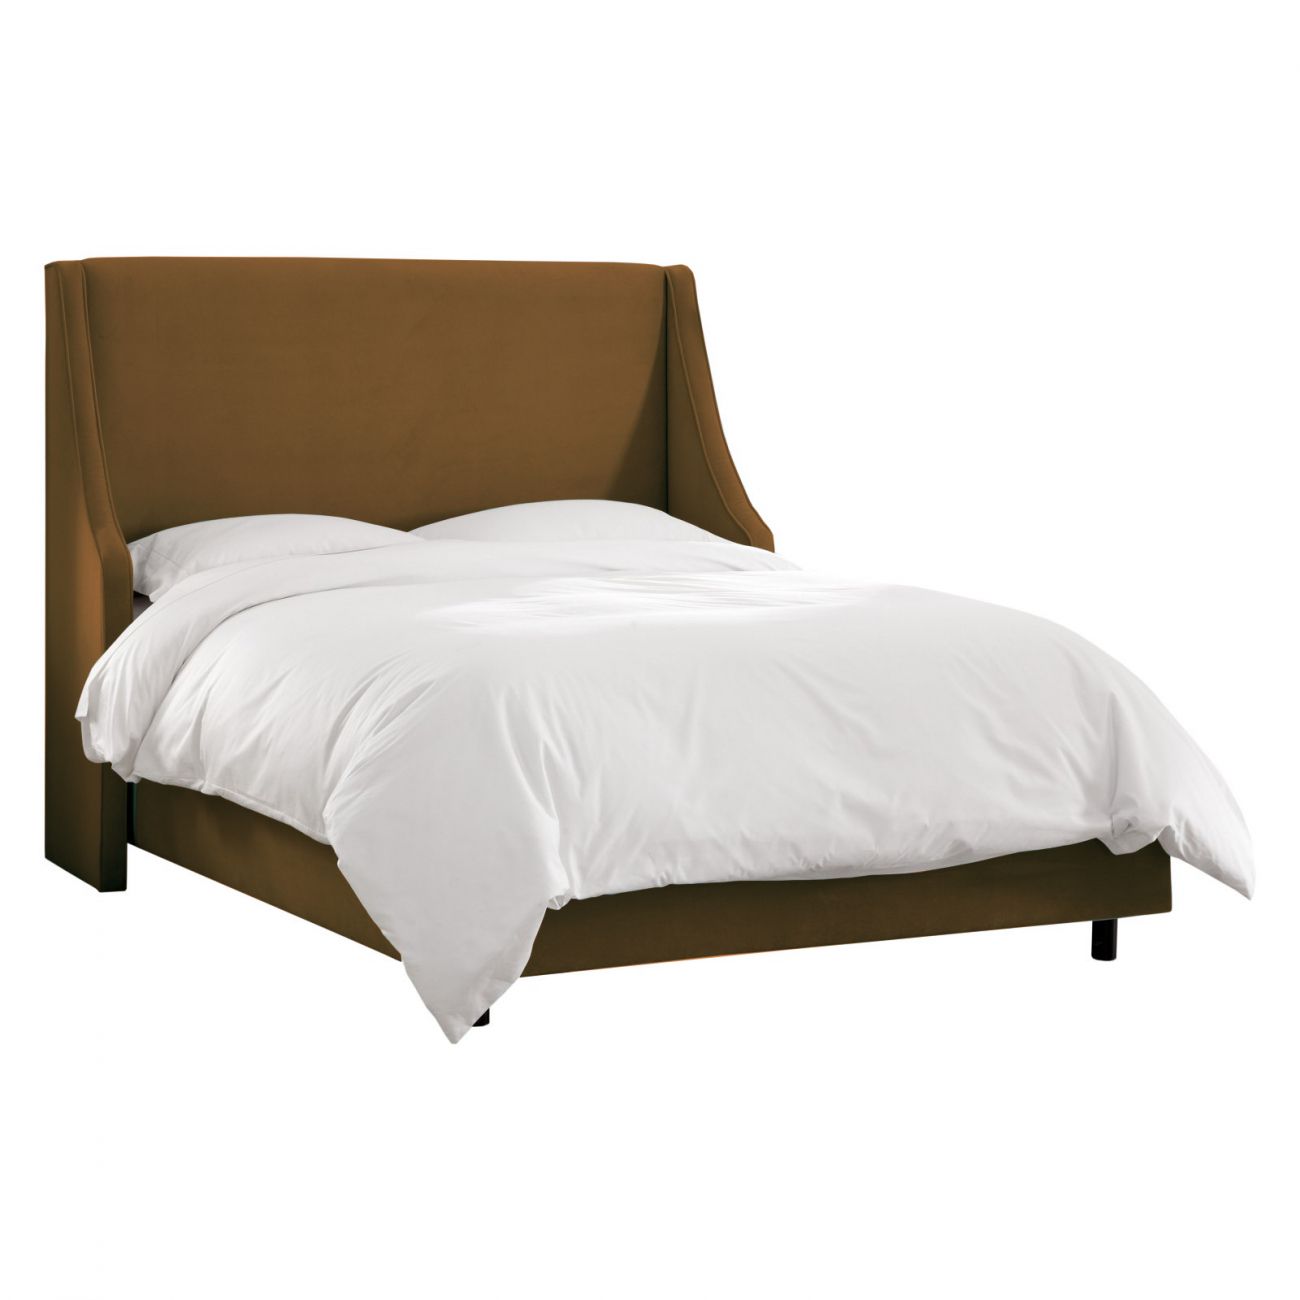 Double bed 180x200 cm brown Davis Wingback Sand Velvet